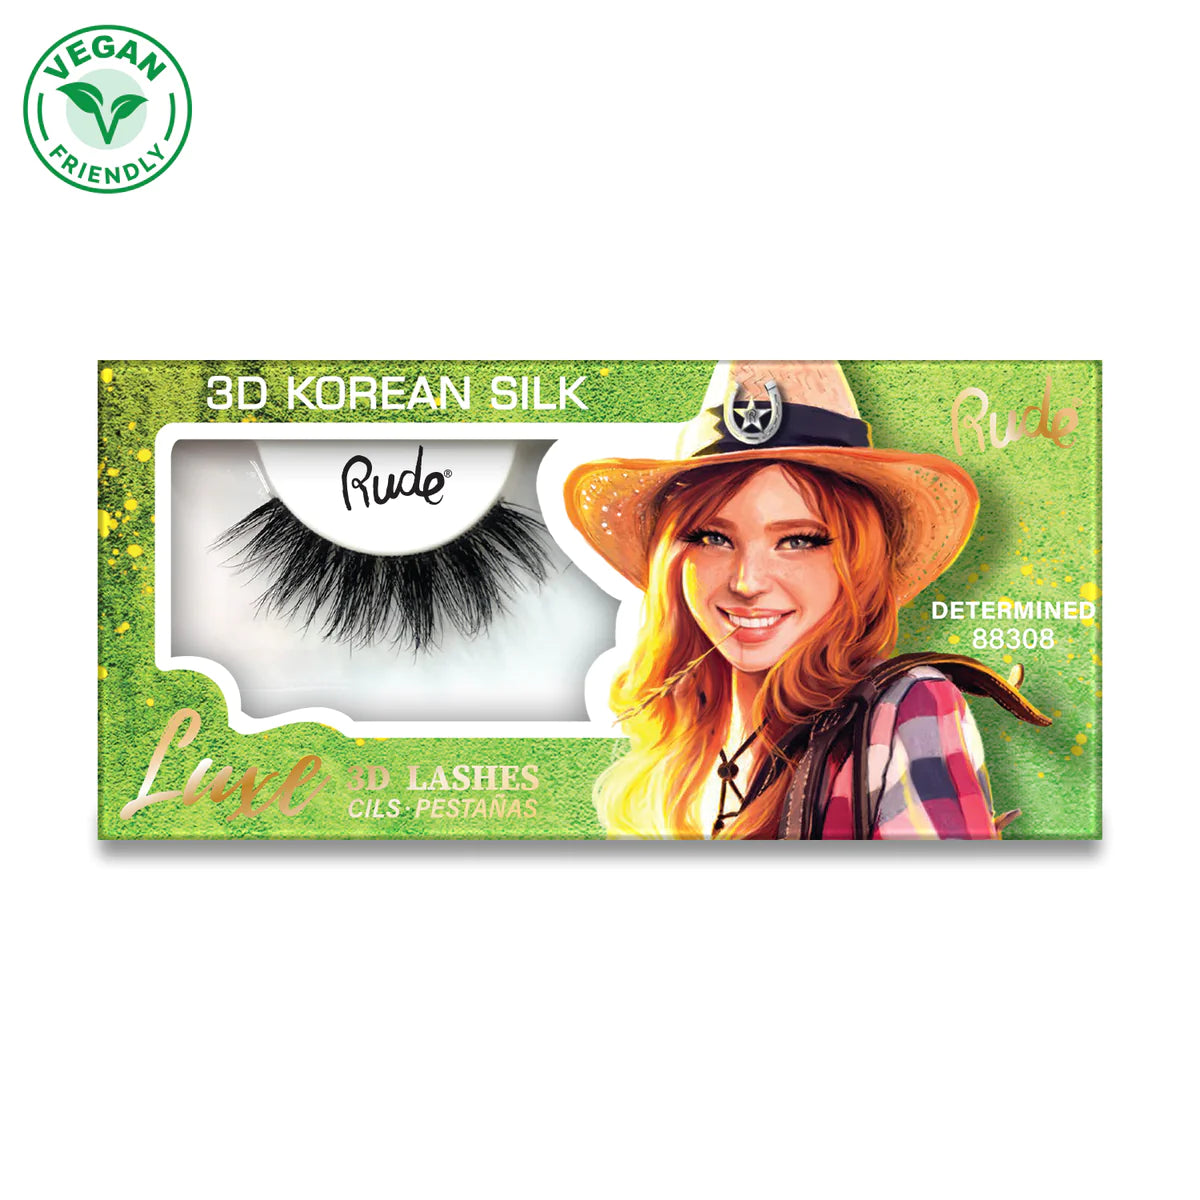 Rude Luxe 3D Lashes | Premium 3D Korean Silk Eyelashes 👁